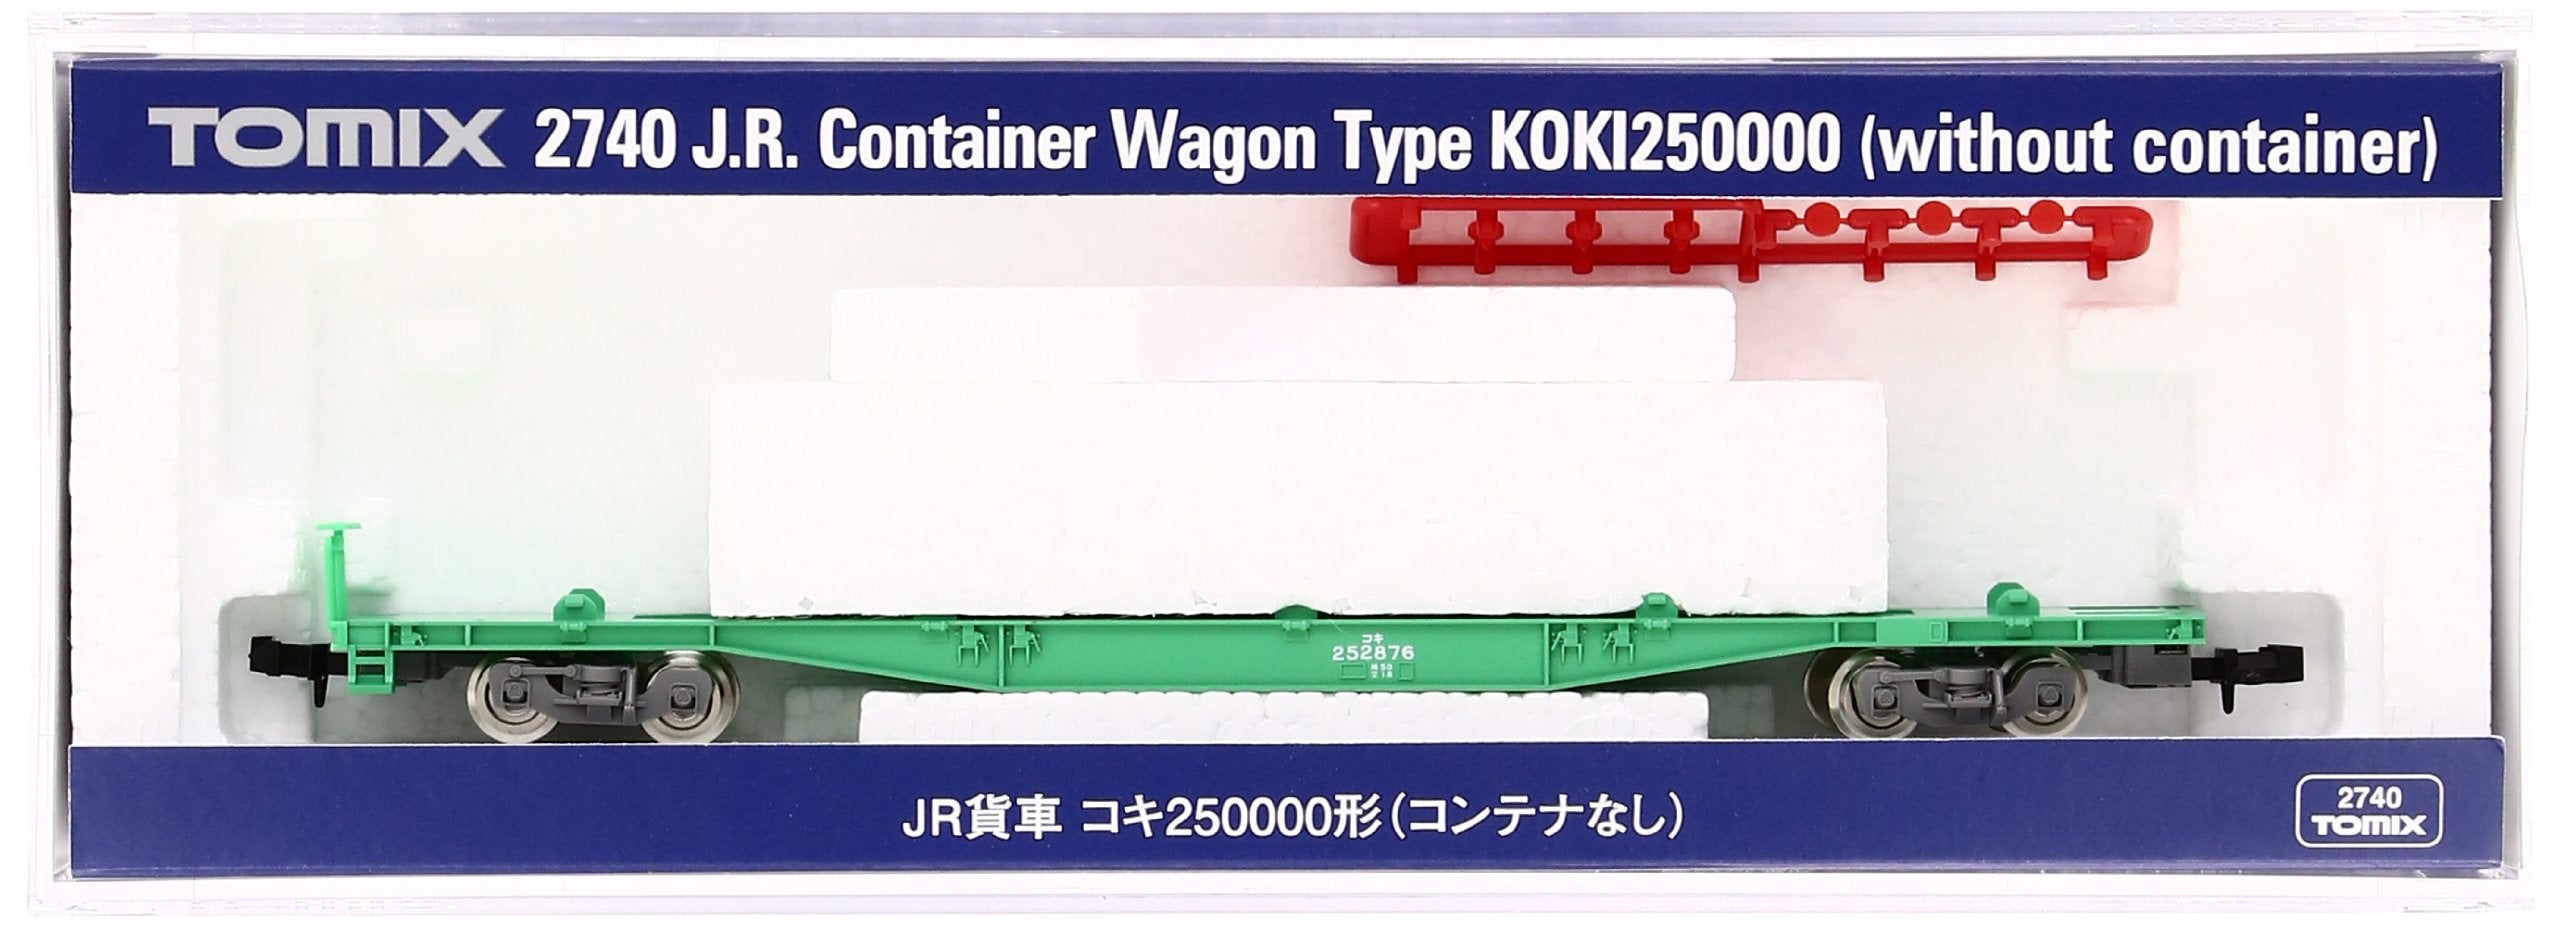 Tomytec Tomix Koki250000 N Gauge 2740 Model Railway Freight Car No Container